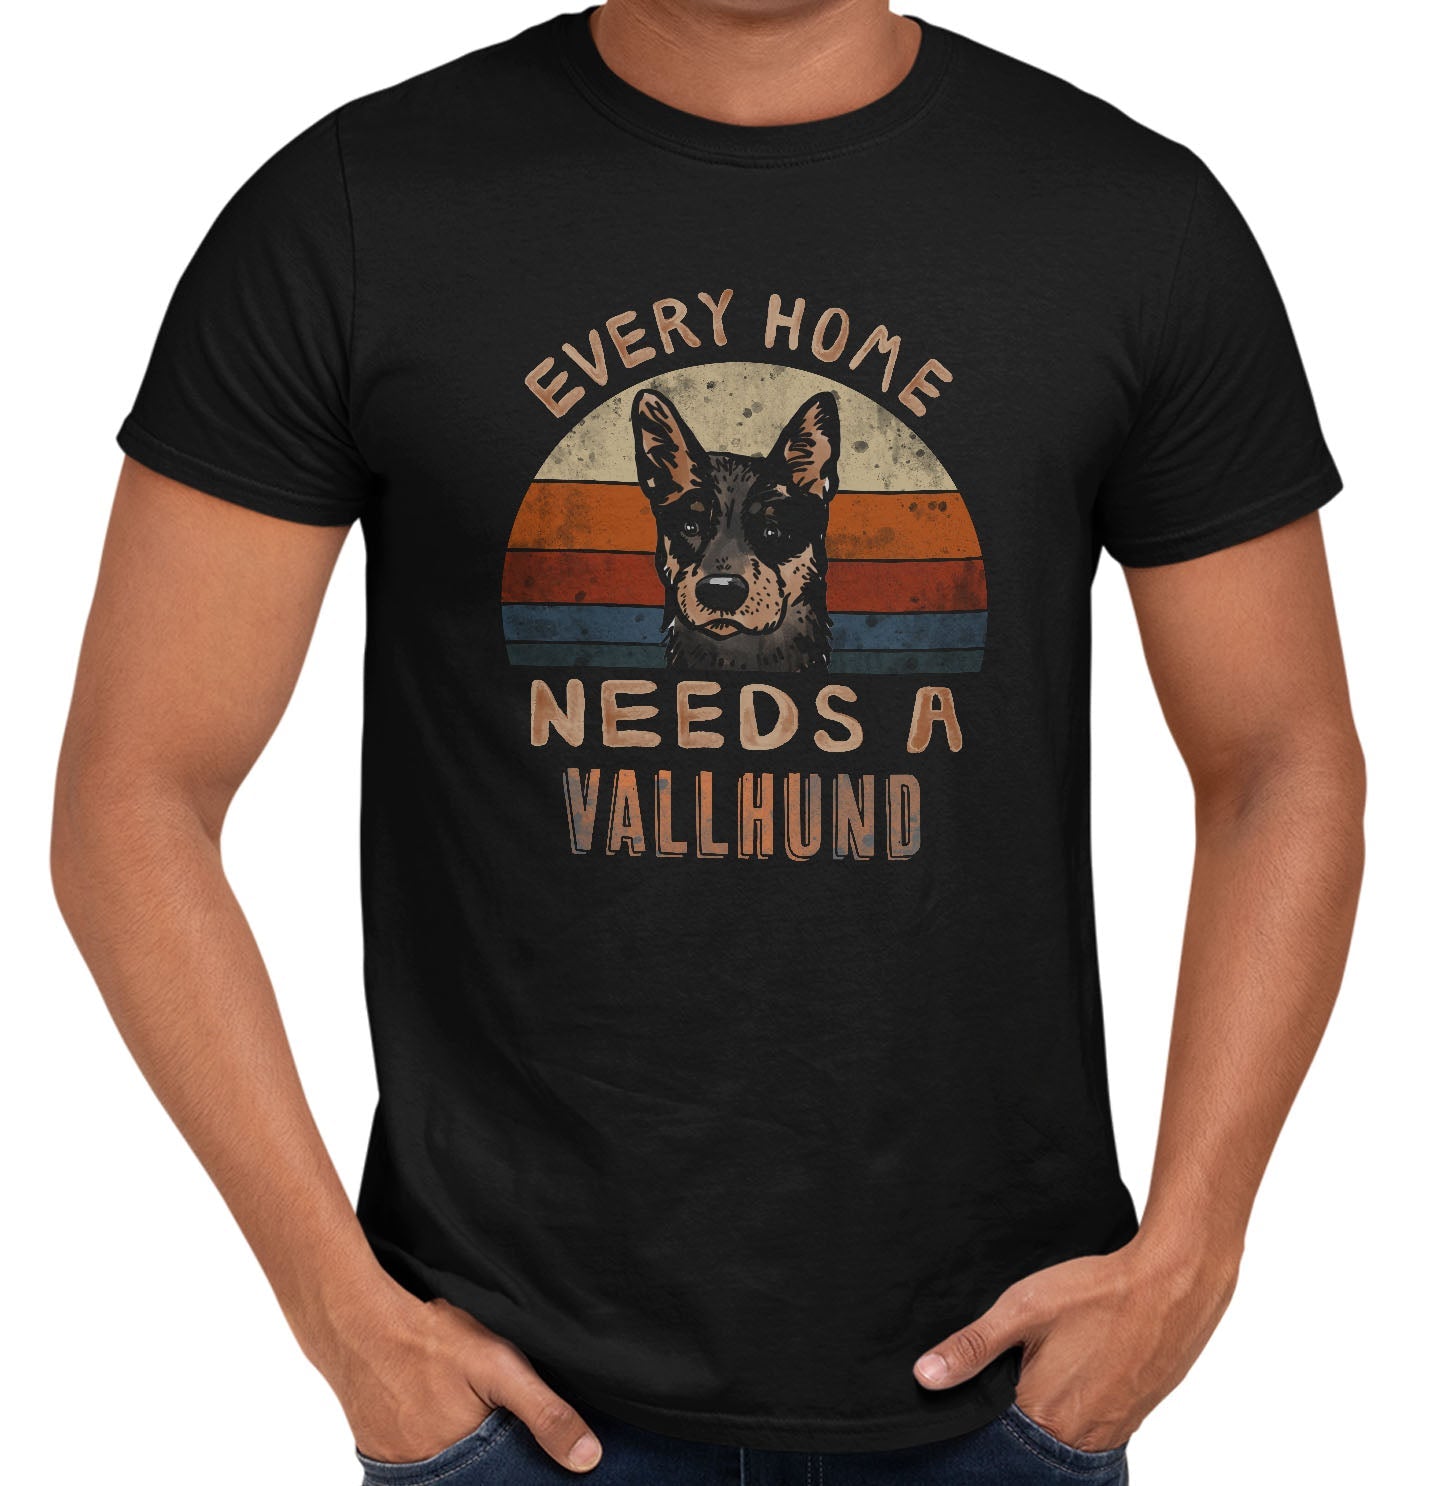 Every Home Needs a Swedish Vallhund - Adult Unisex T-Shirt